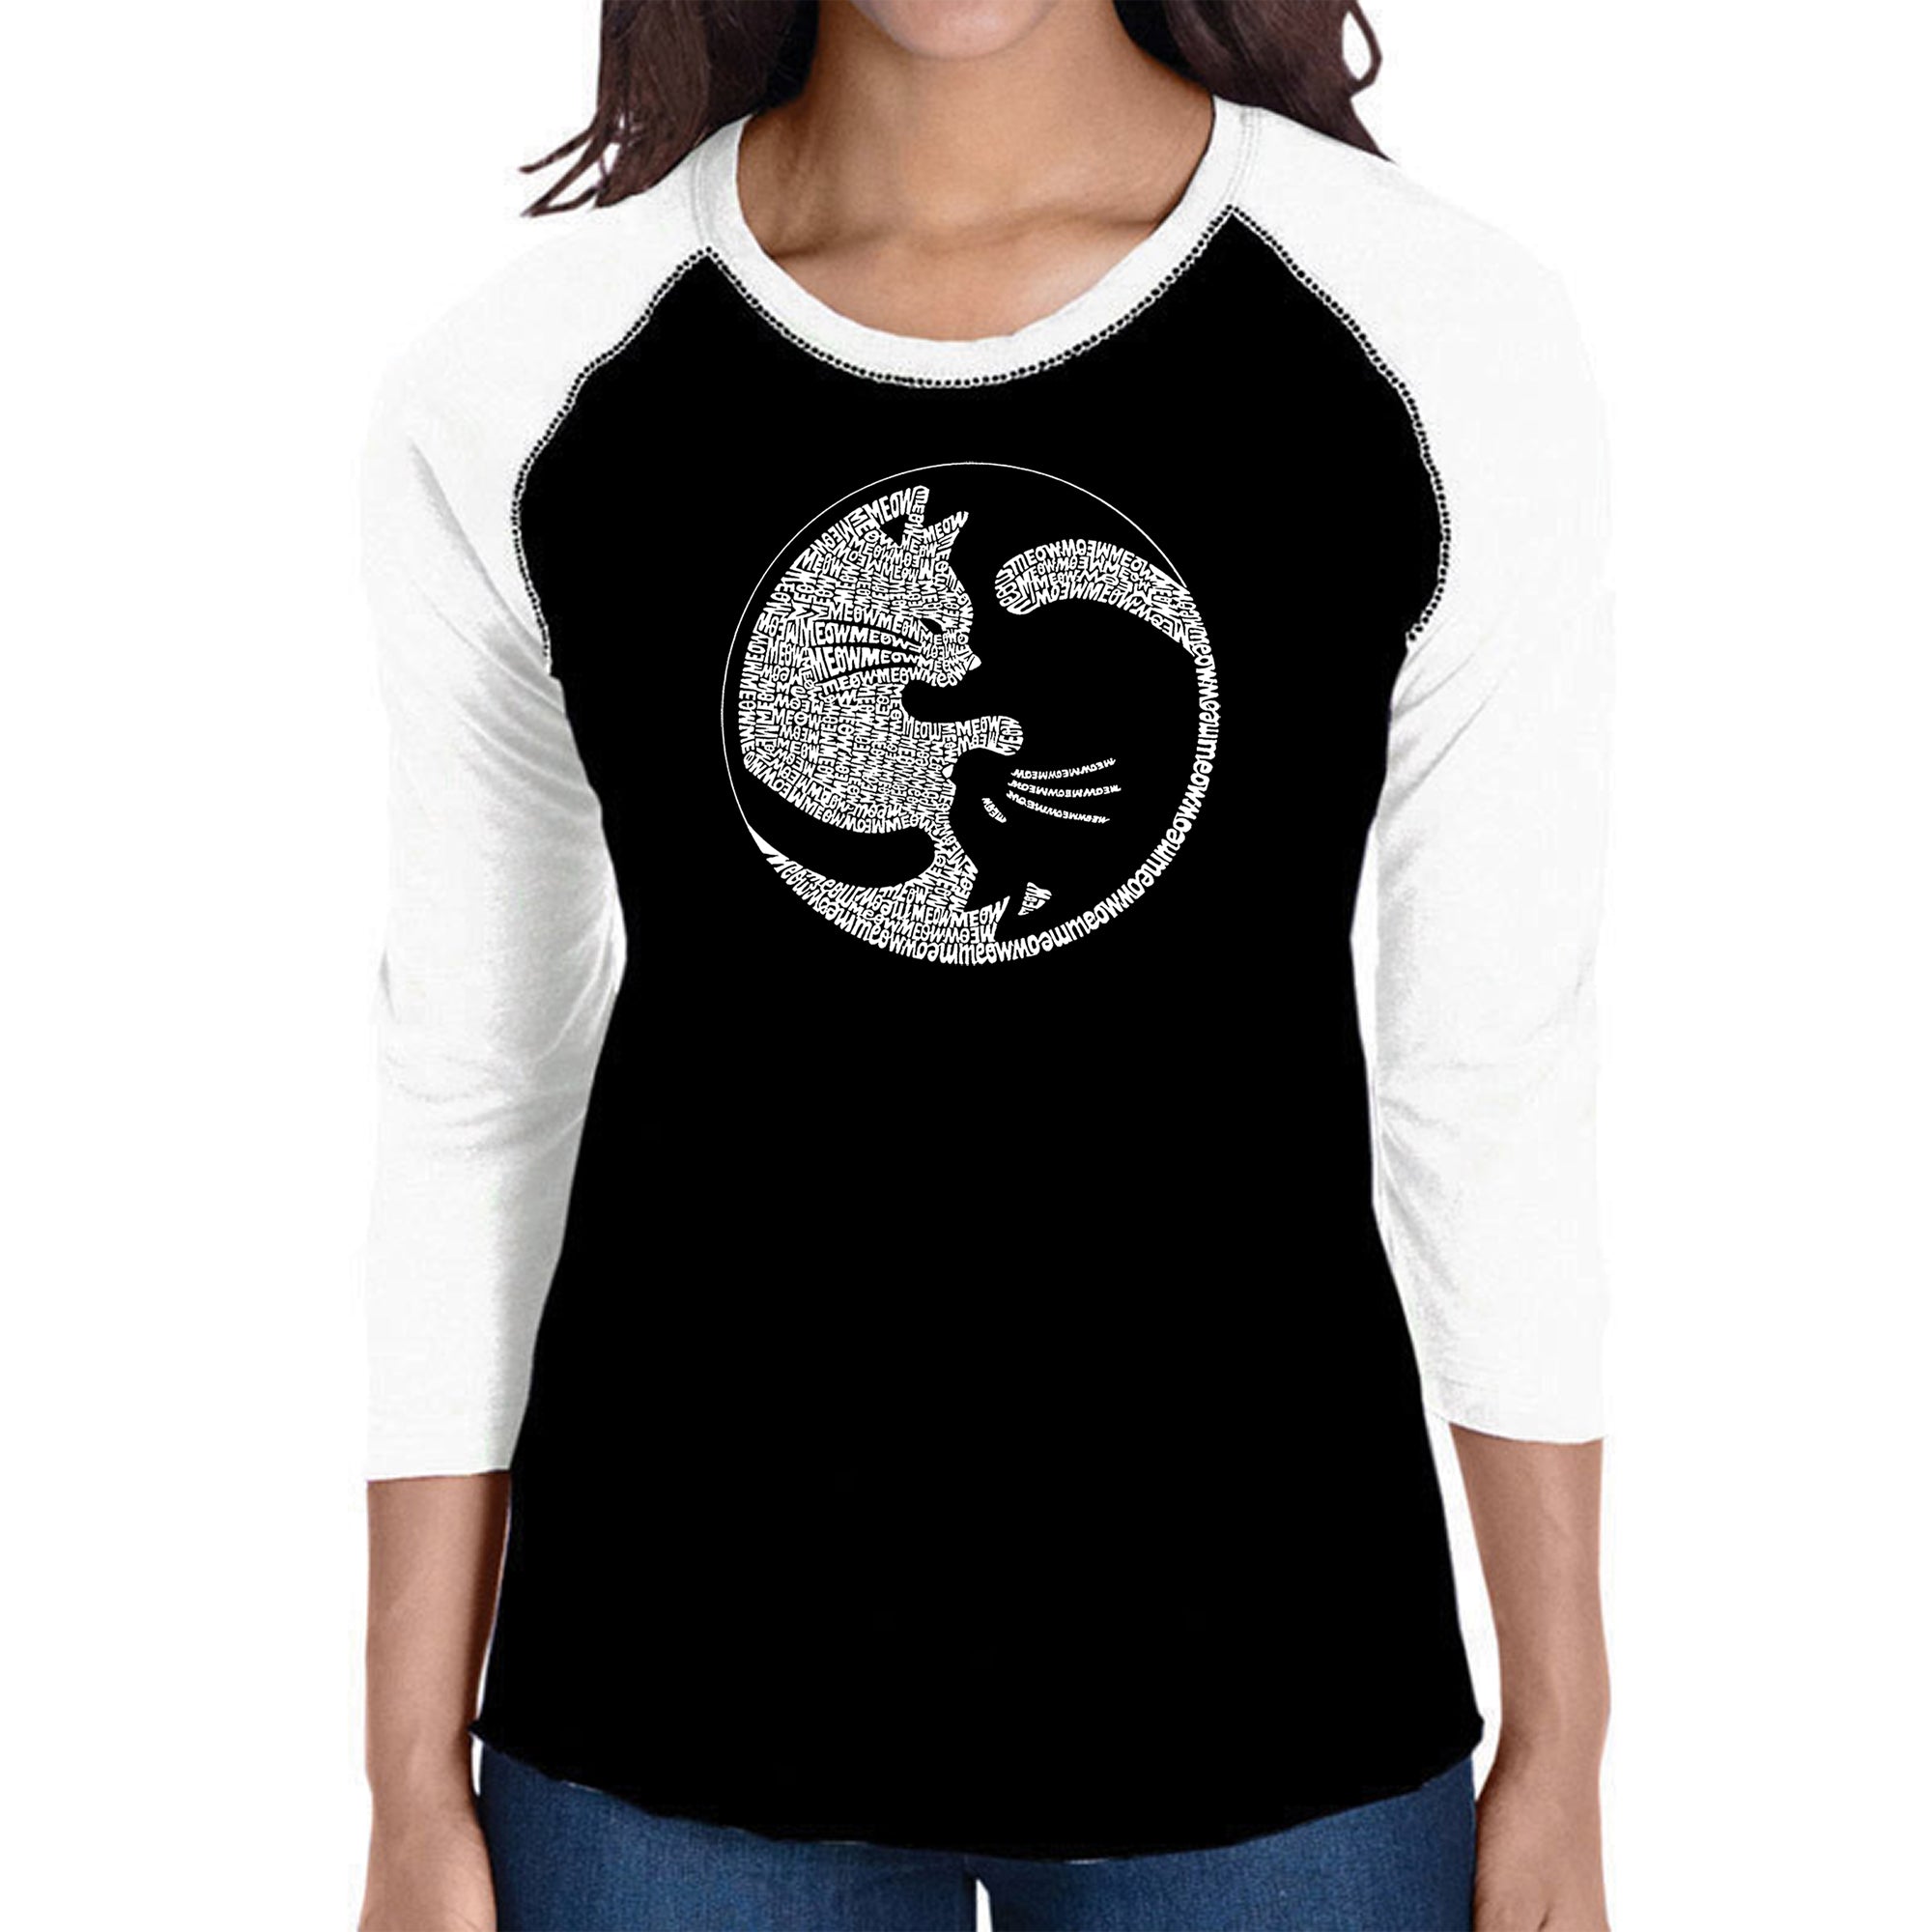 Yin Yang Cat - Women's Raglan Word Art T-Shirt - Black/White - X-Large